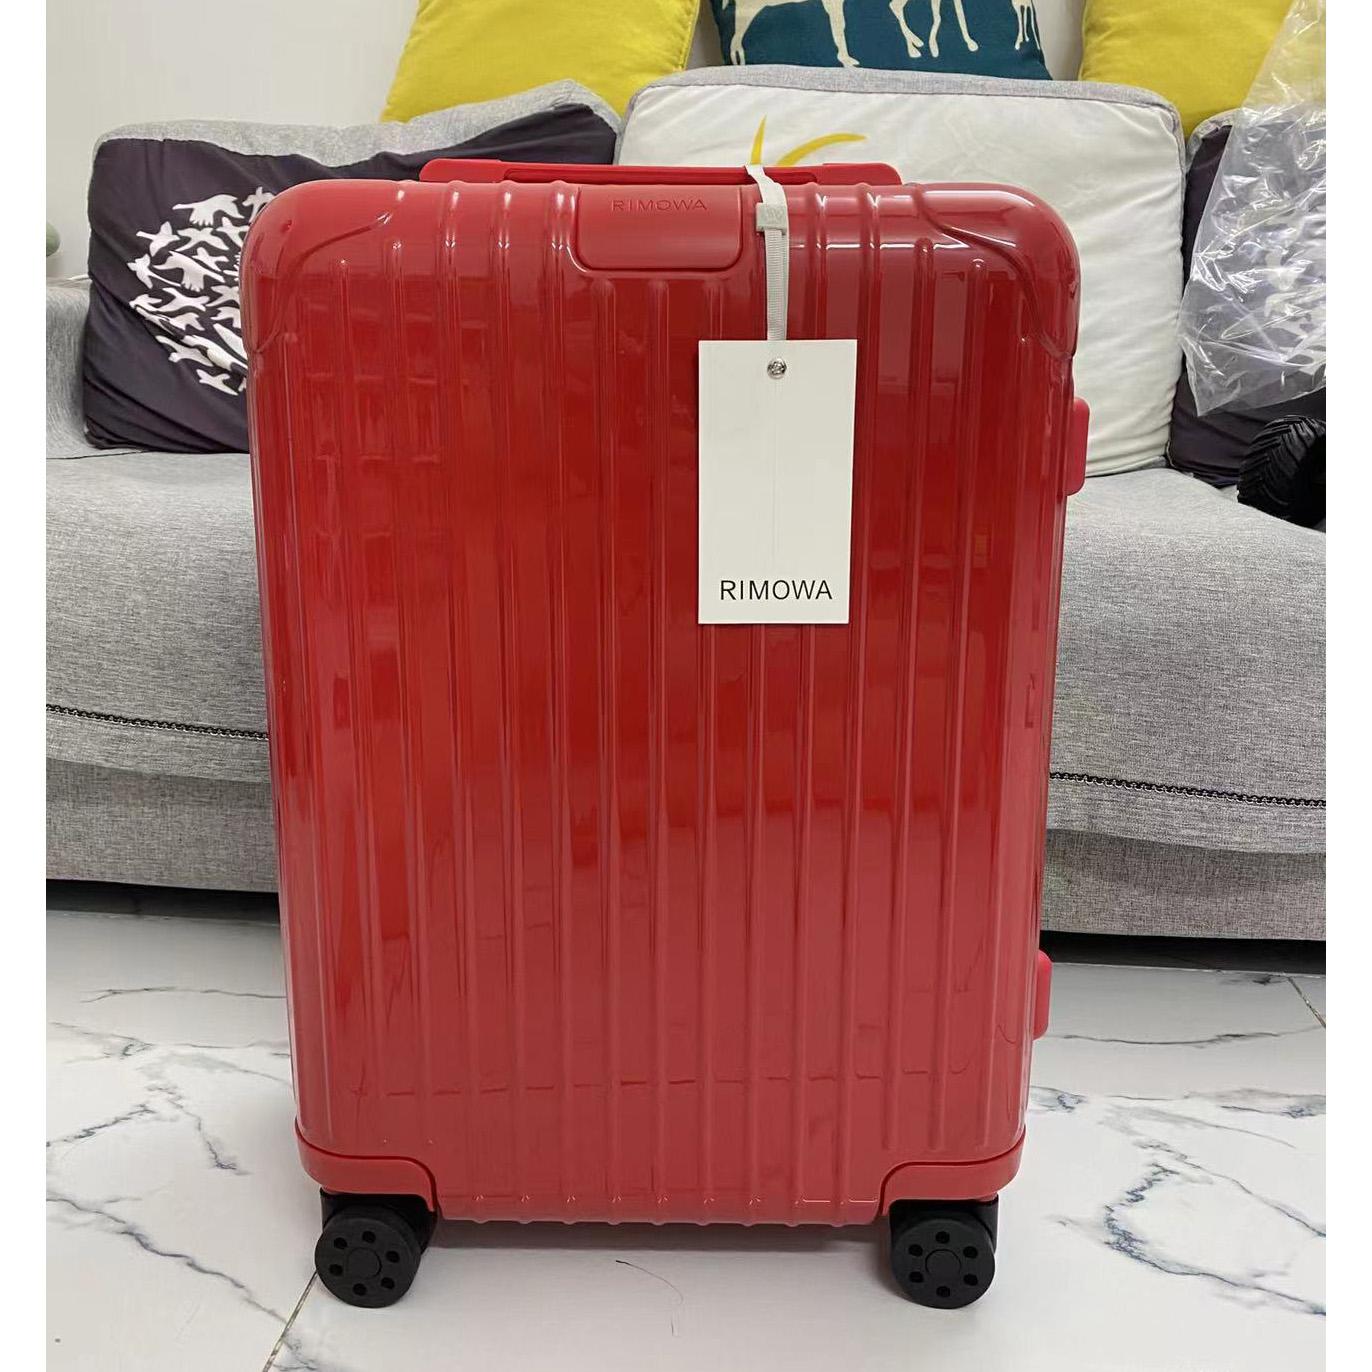 Rimowa Luggage - DesignerGu